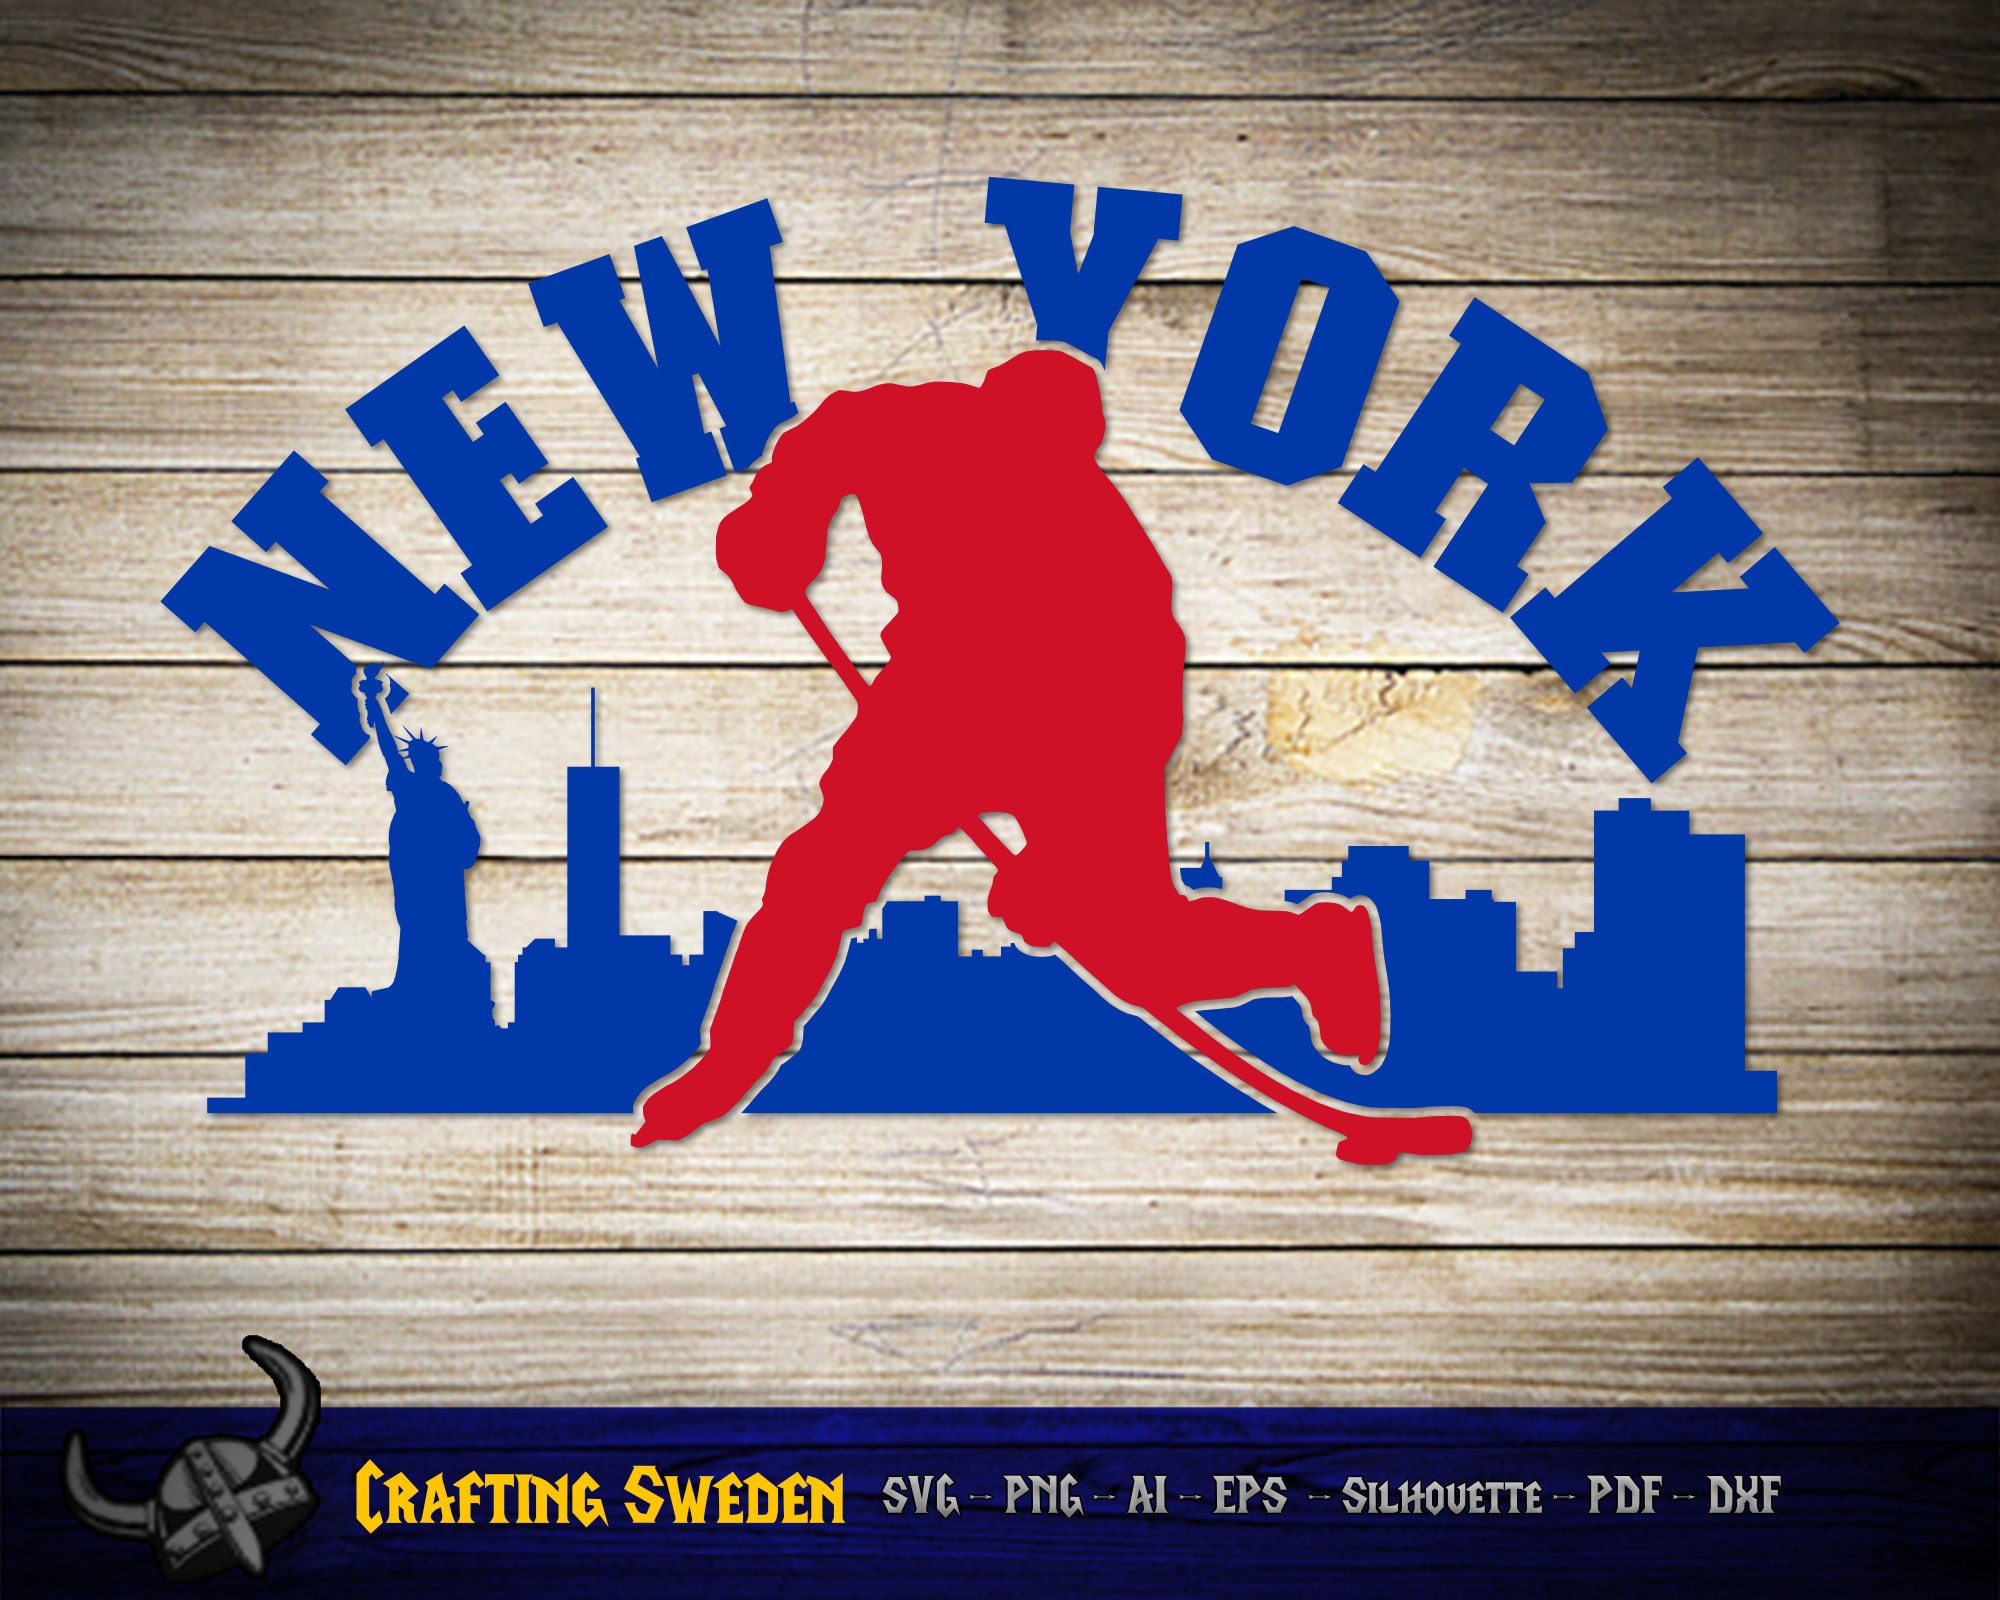 NHL New York Rangers, New York Rangers SVG Vector, New York